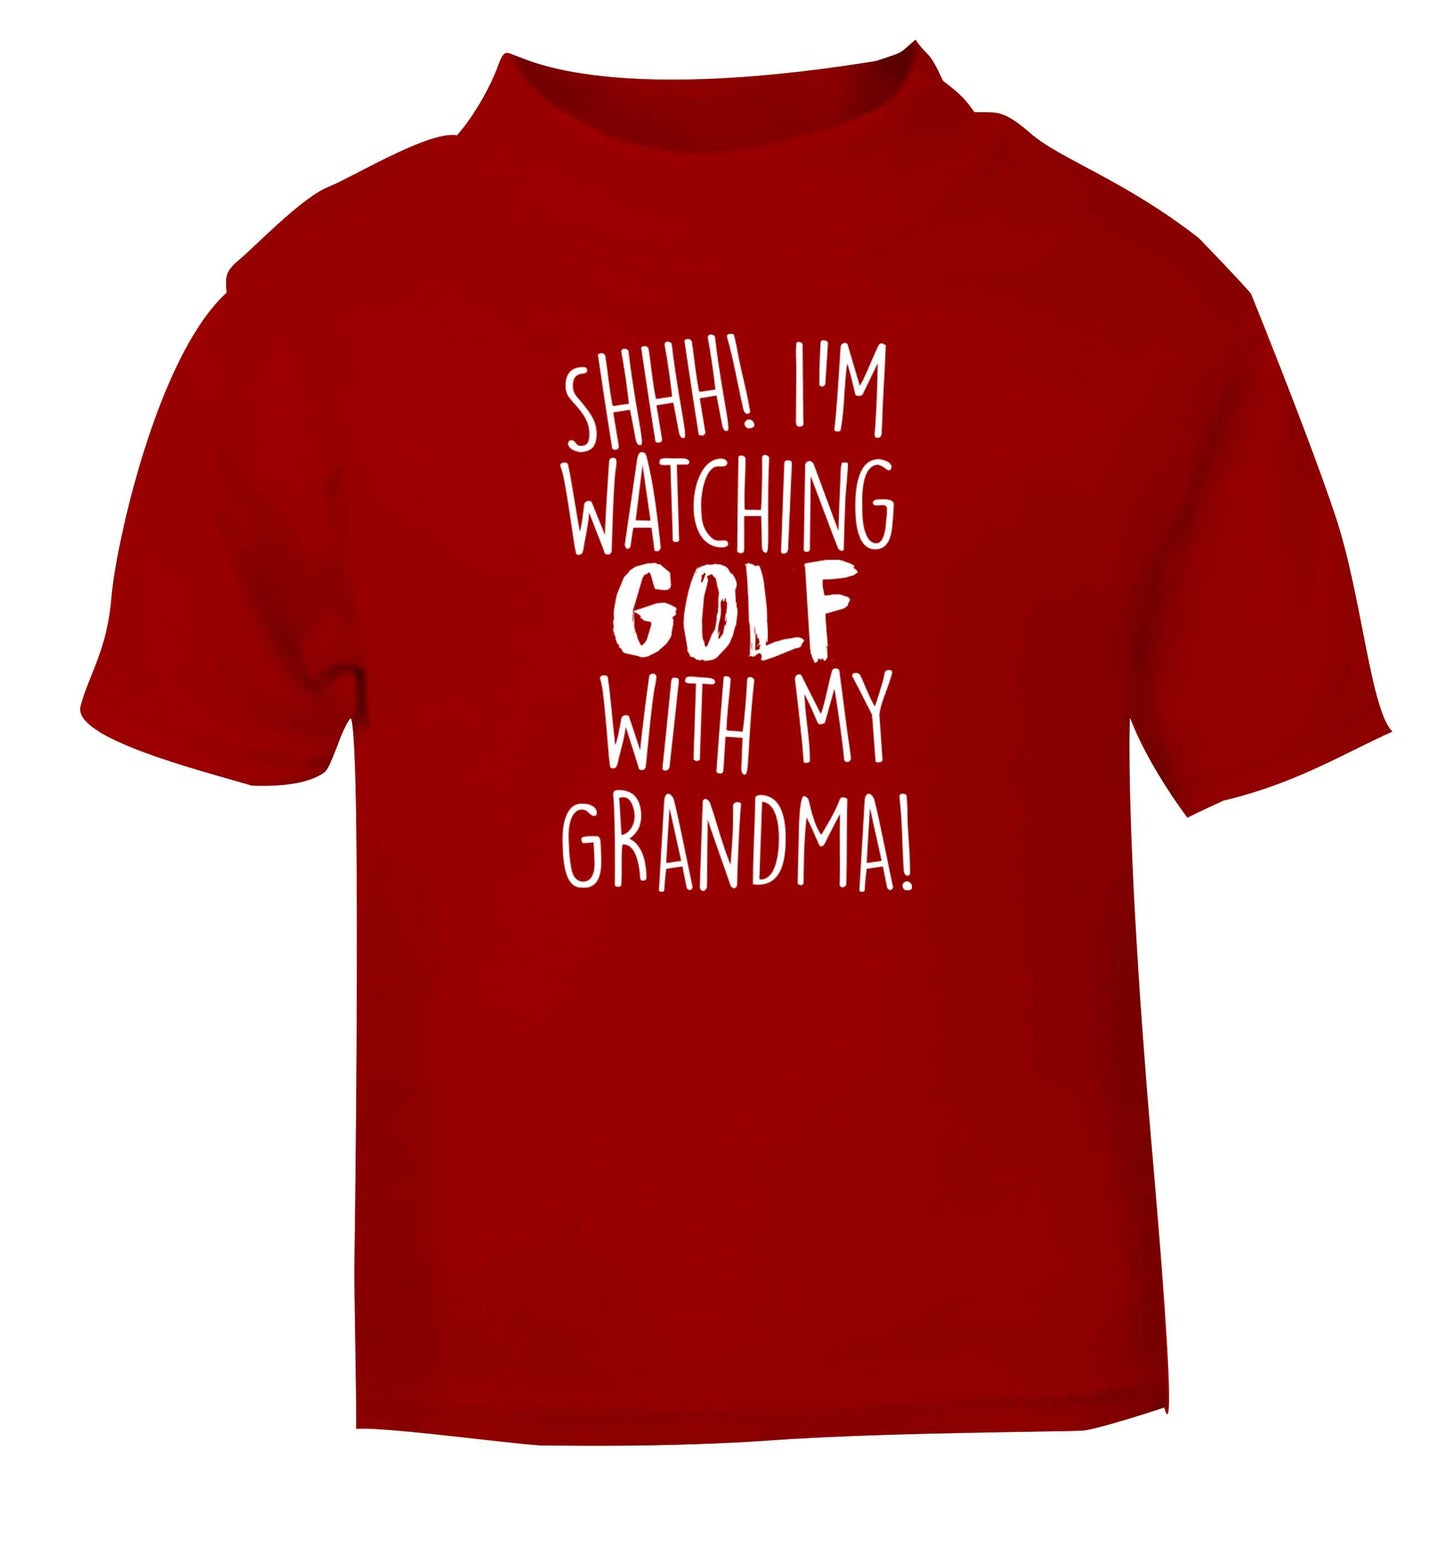 Shh I'm watching golf with my grandma red Baby Toddler Tshirt 2 Years